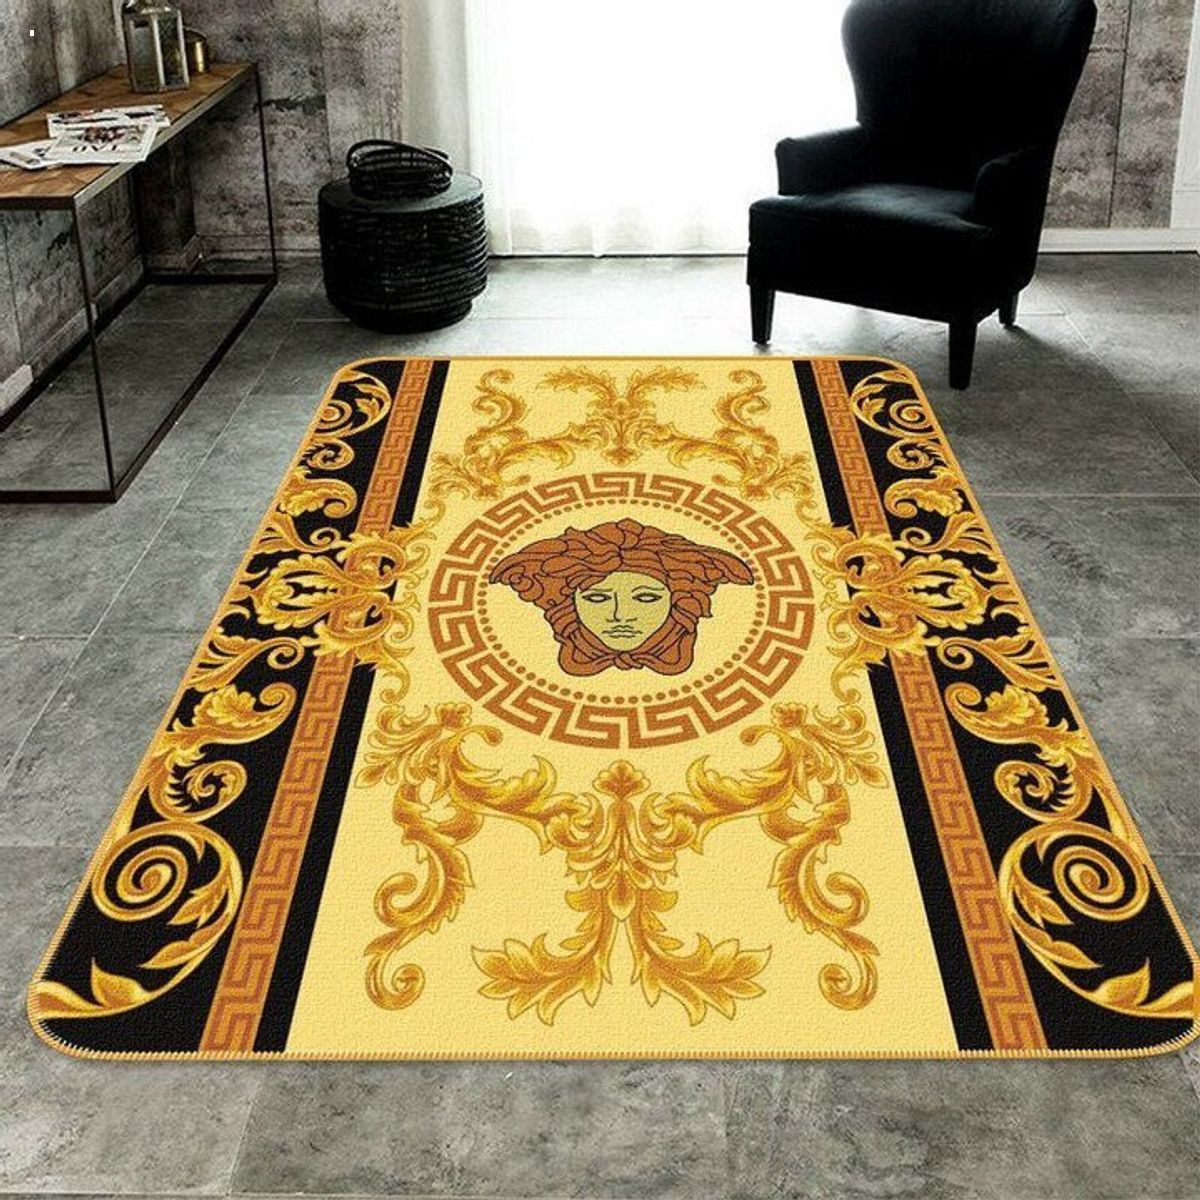 Versace Black Gold Mix Logo Luxury Brand Carpet Rug Limited Edition